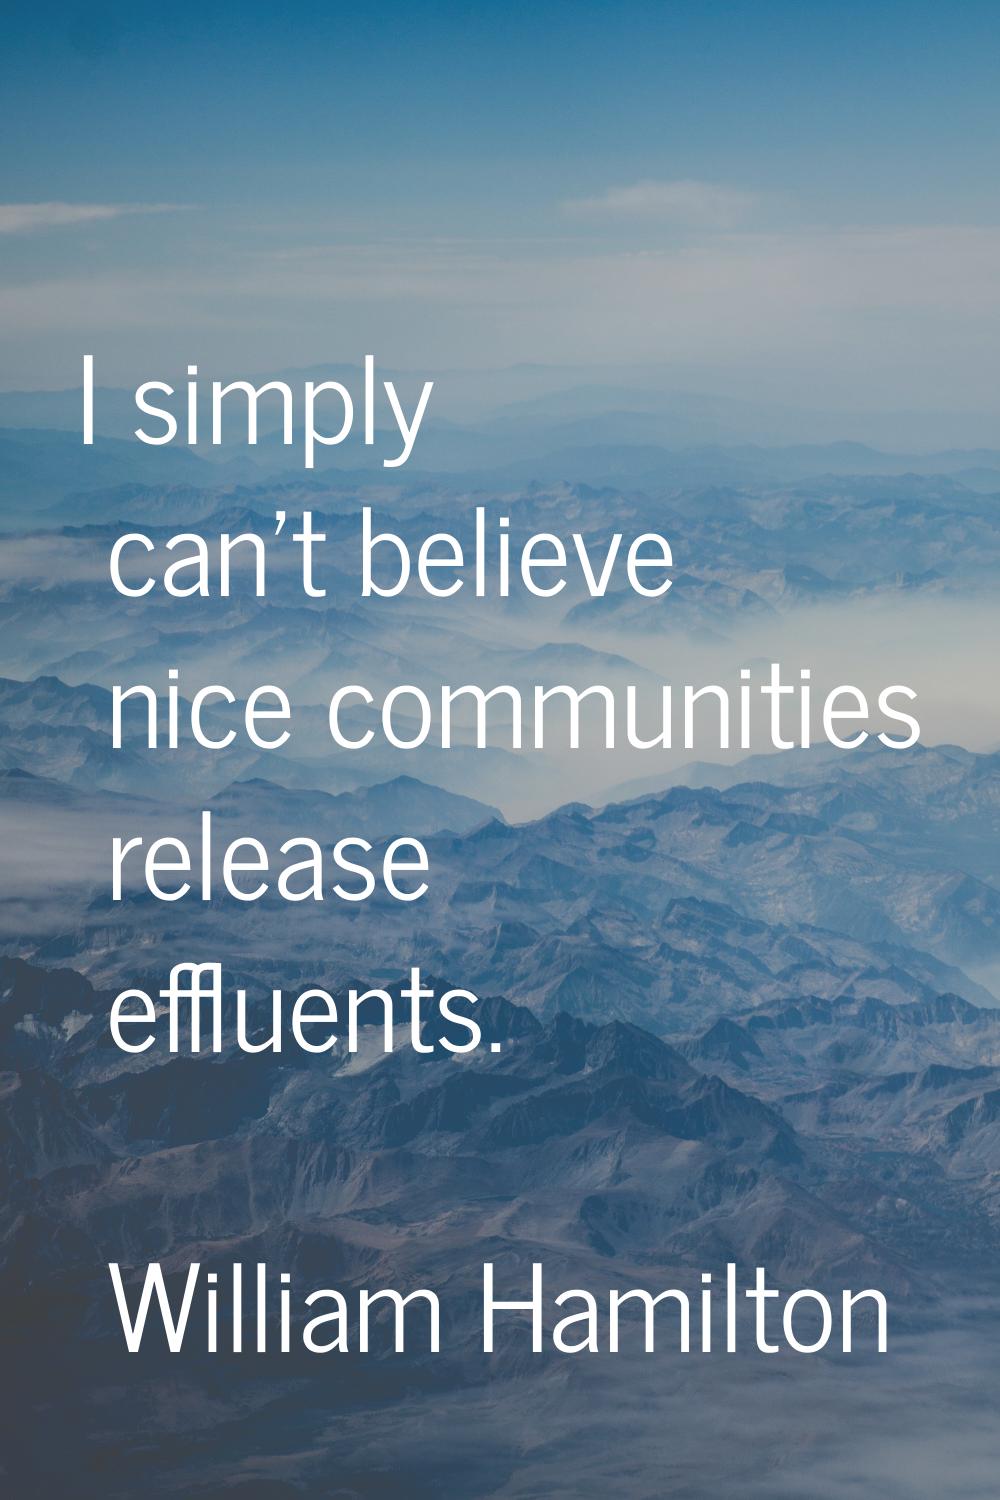 I simply can't believe nice communities release effluents.